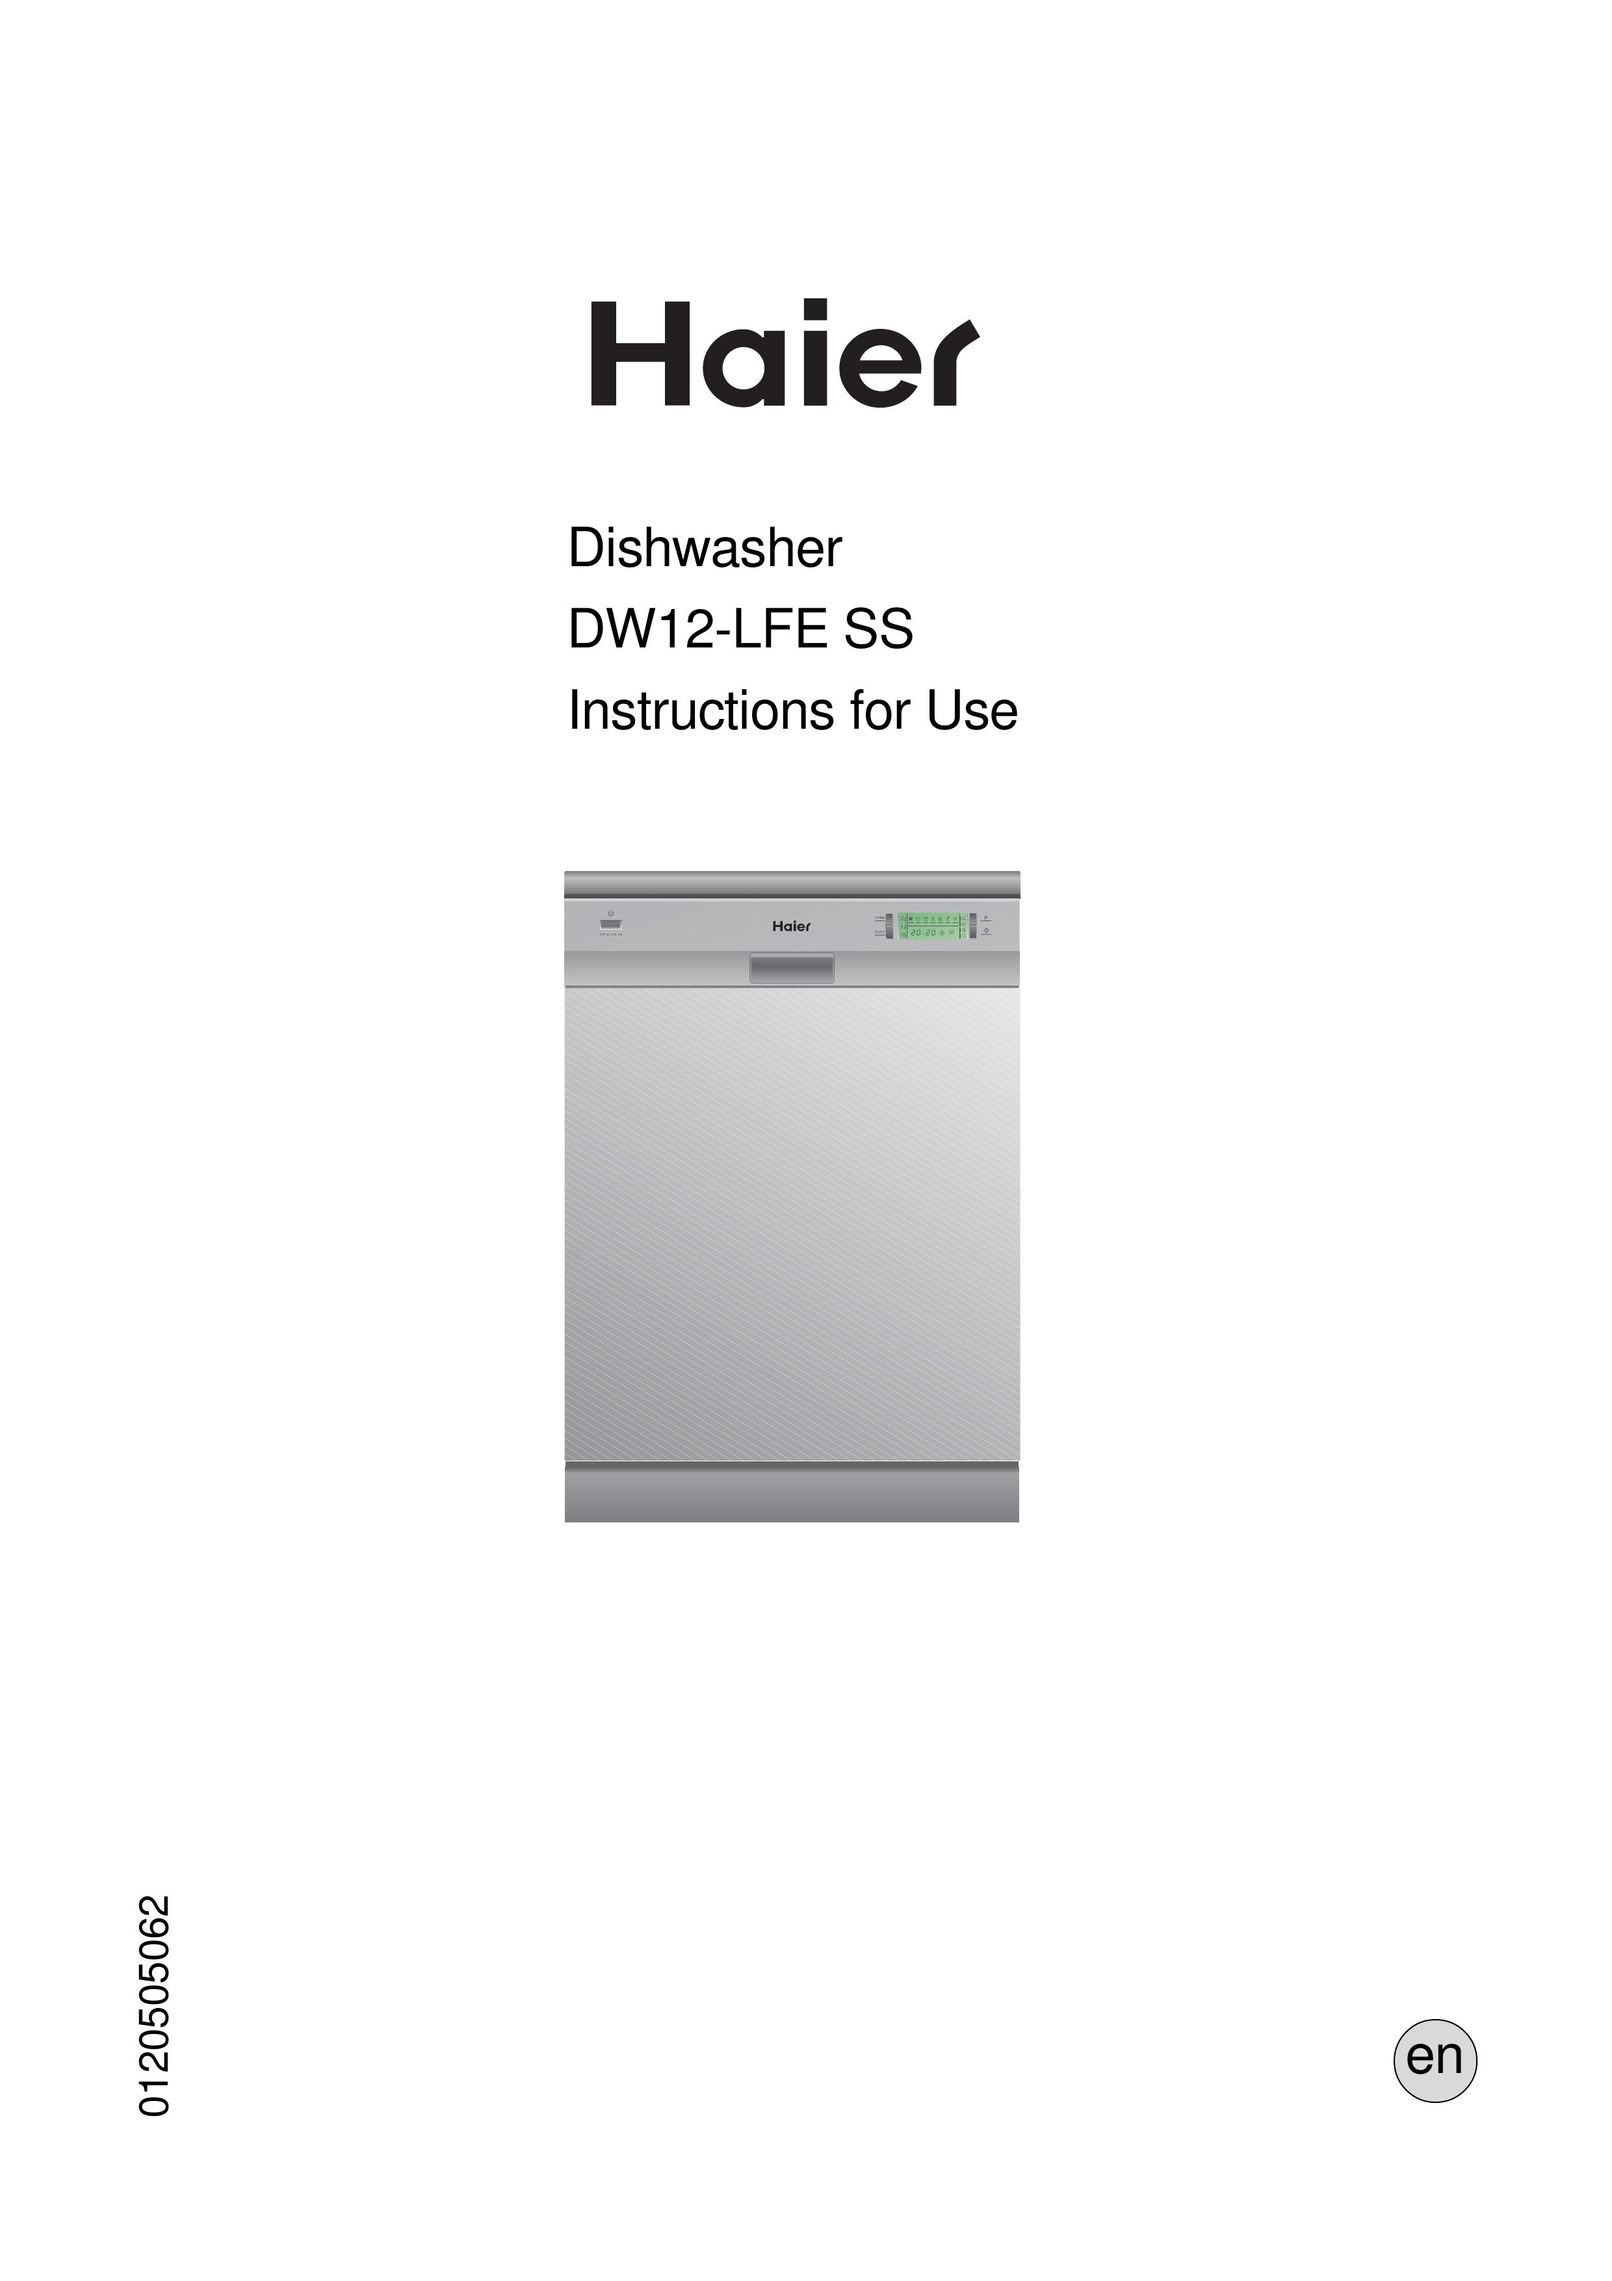 Haier DW12-LFE SS Dishwasher User Manual